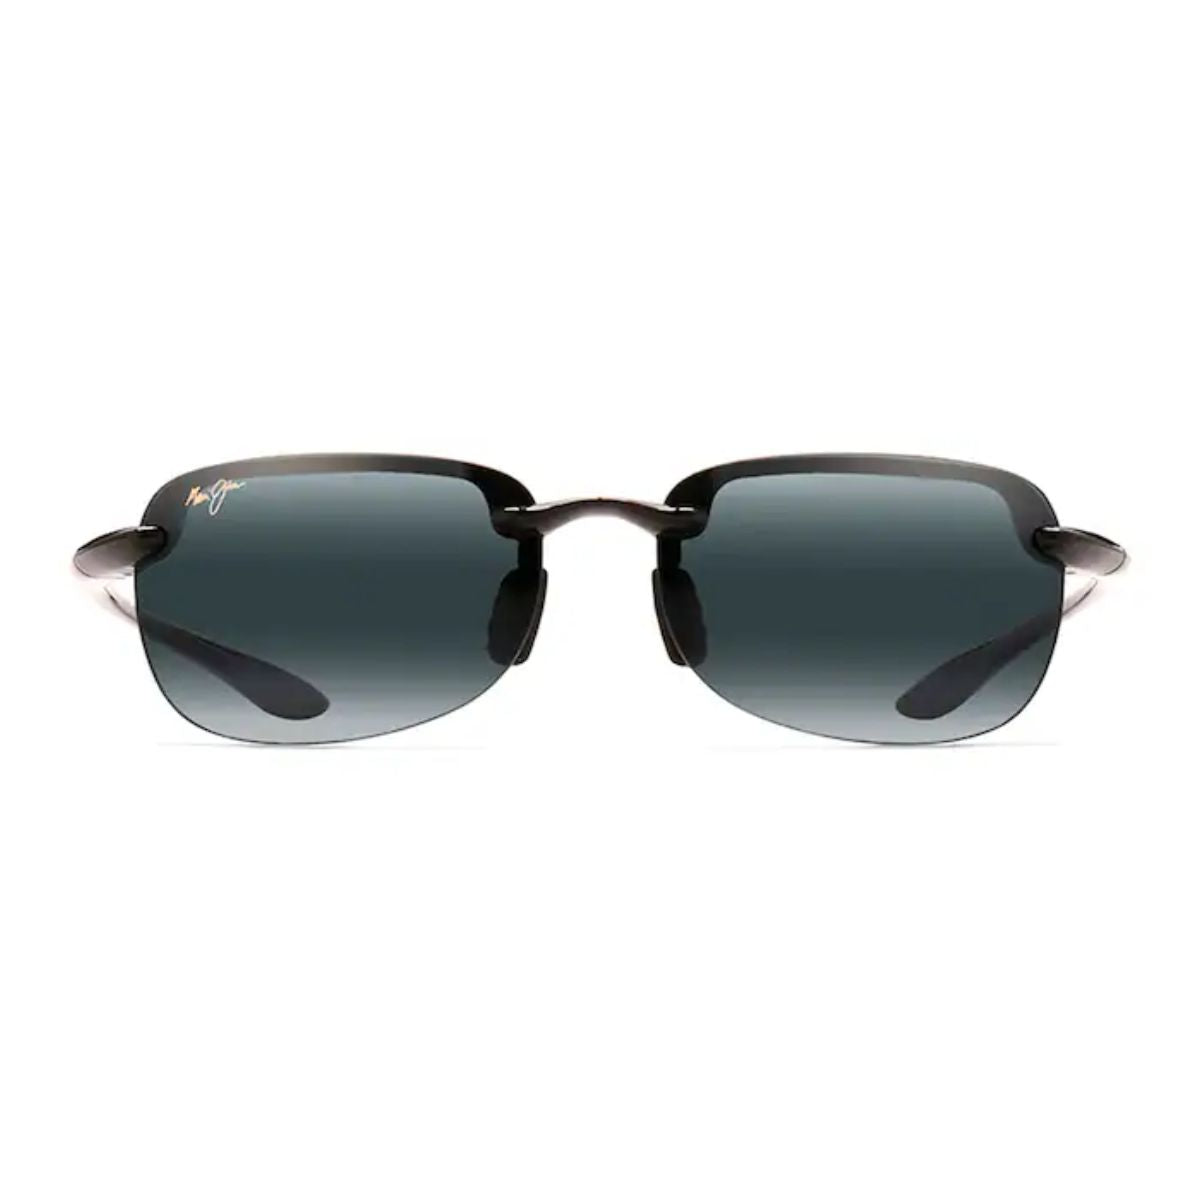 "Buy Stylish Maui Jim Sandy Beach Sunglasses For Mens | Offer Sunglasses At Optorium"